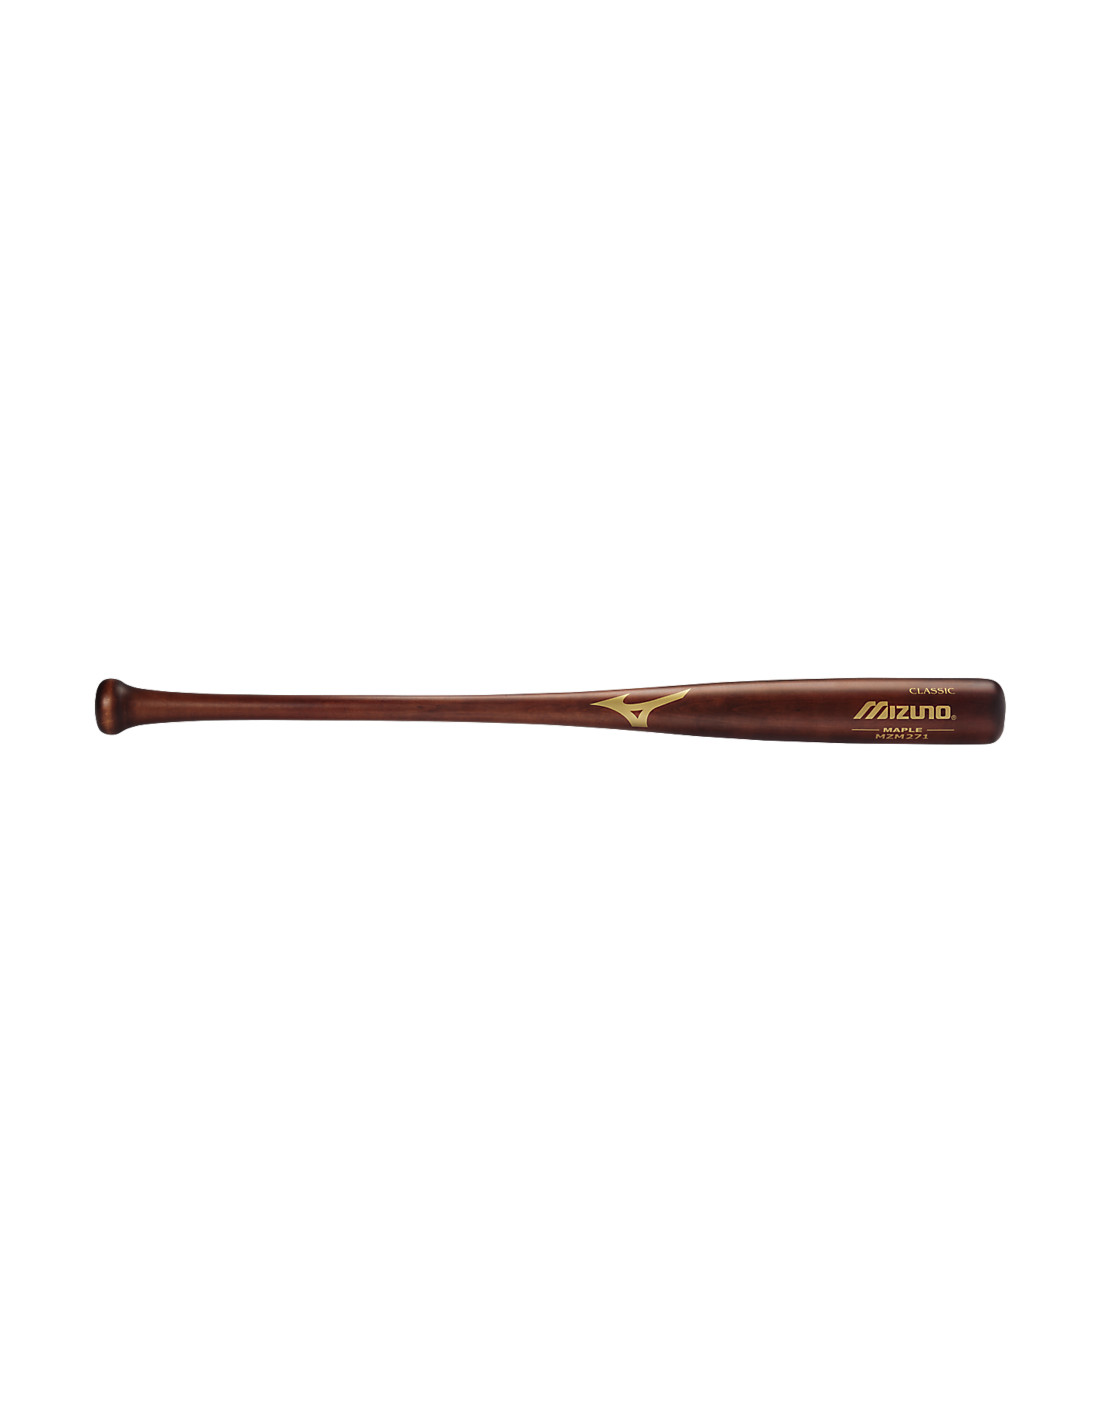 Louisville Slugger Personalized Baseball Bat - The Man Registry